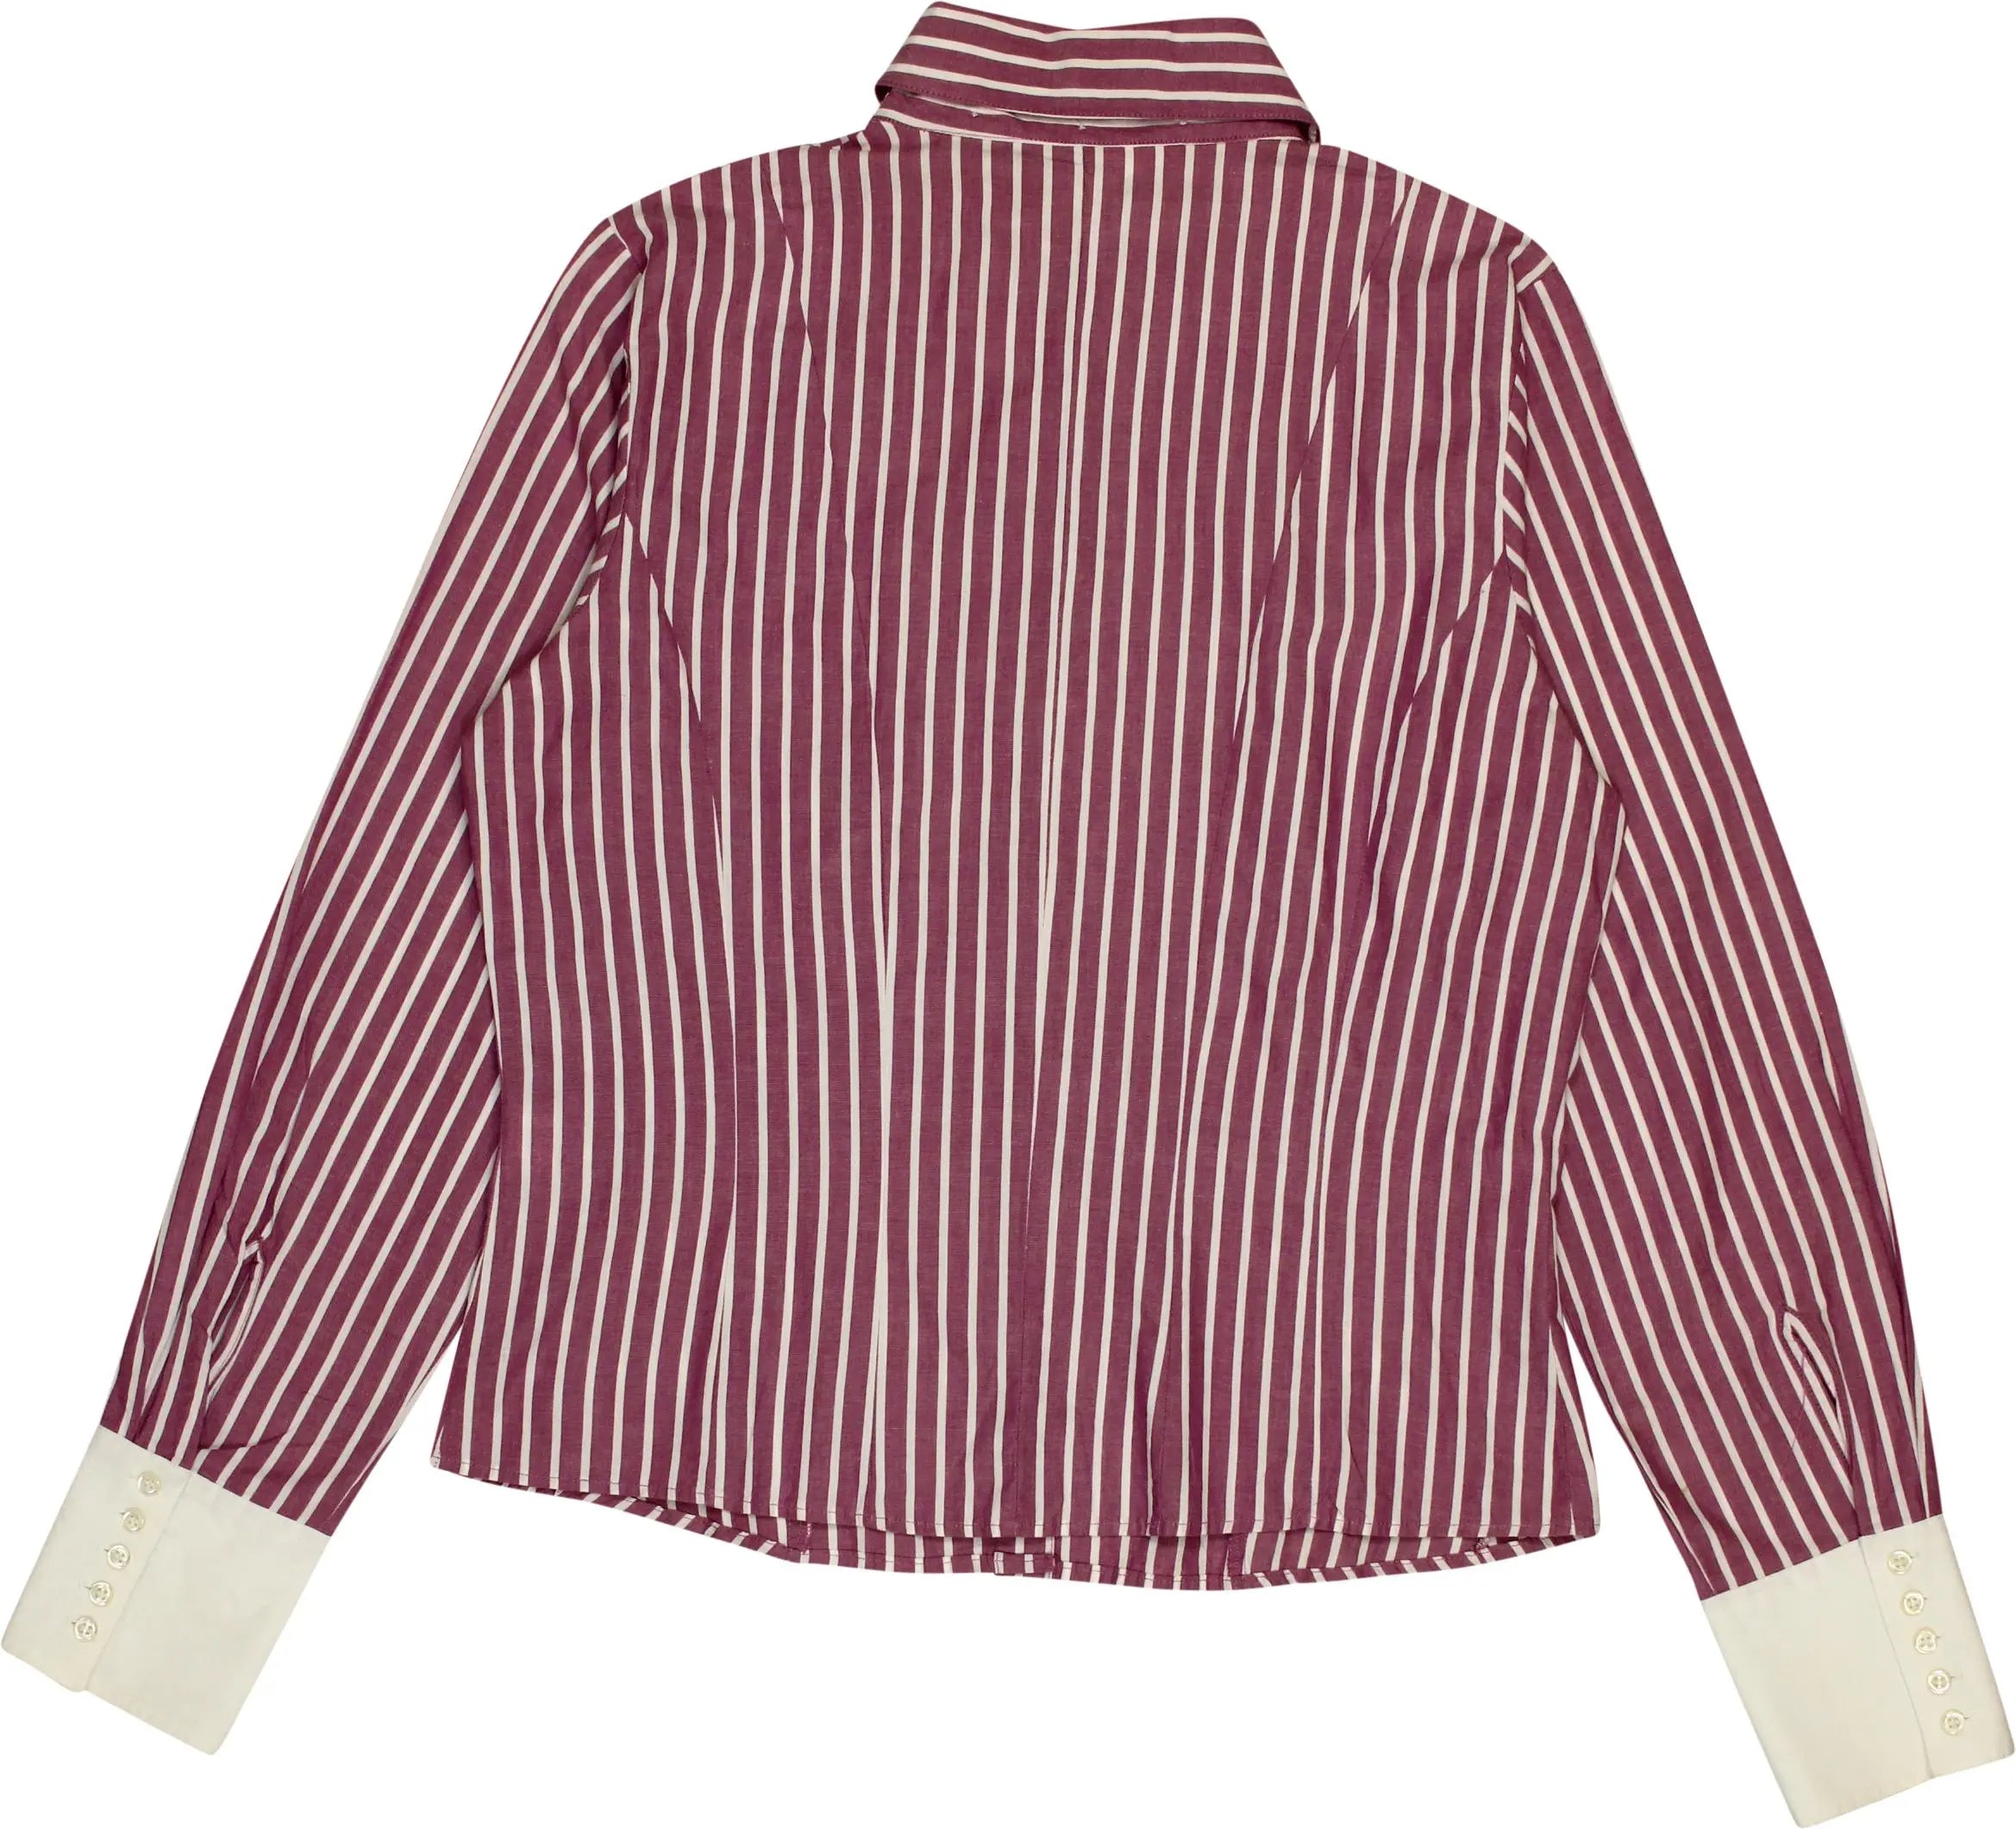 La Ligna - Striped Shirt- ThriftTale.com - Vintage and second handclothing